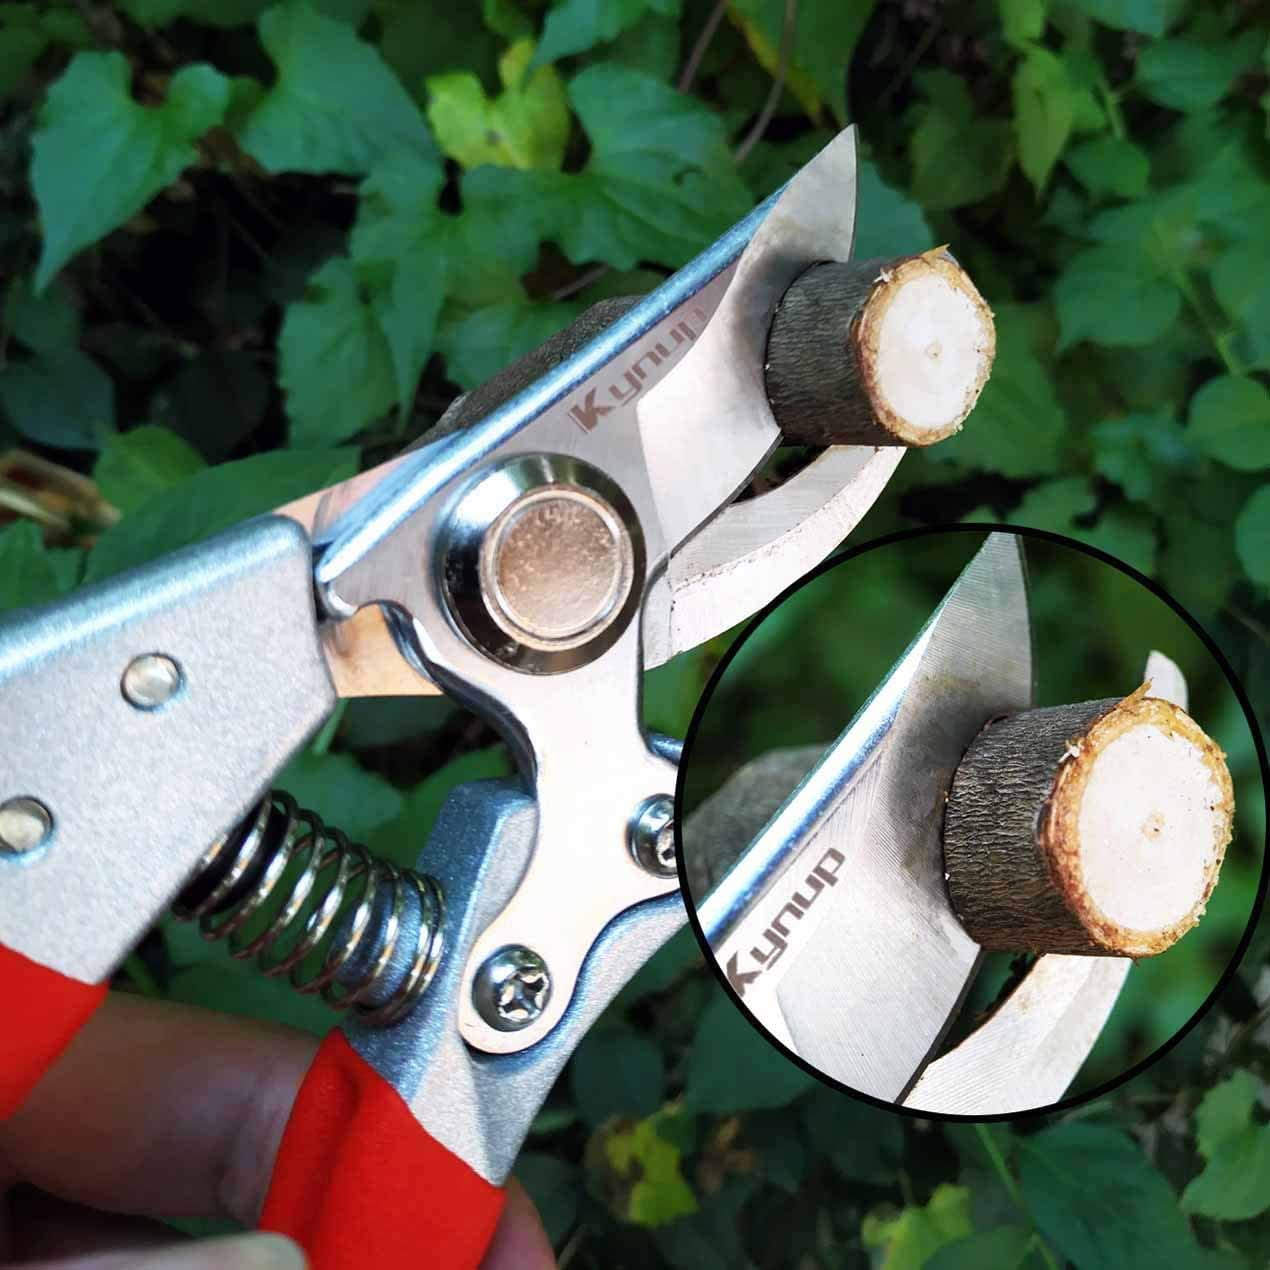 Shaper Pruning 8' Inch Best Garden Hand Pruner Shears SP001 – ShaperPruning